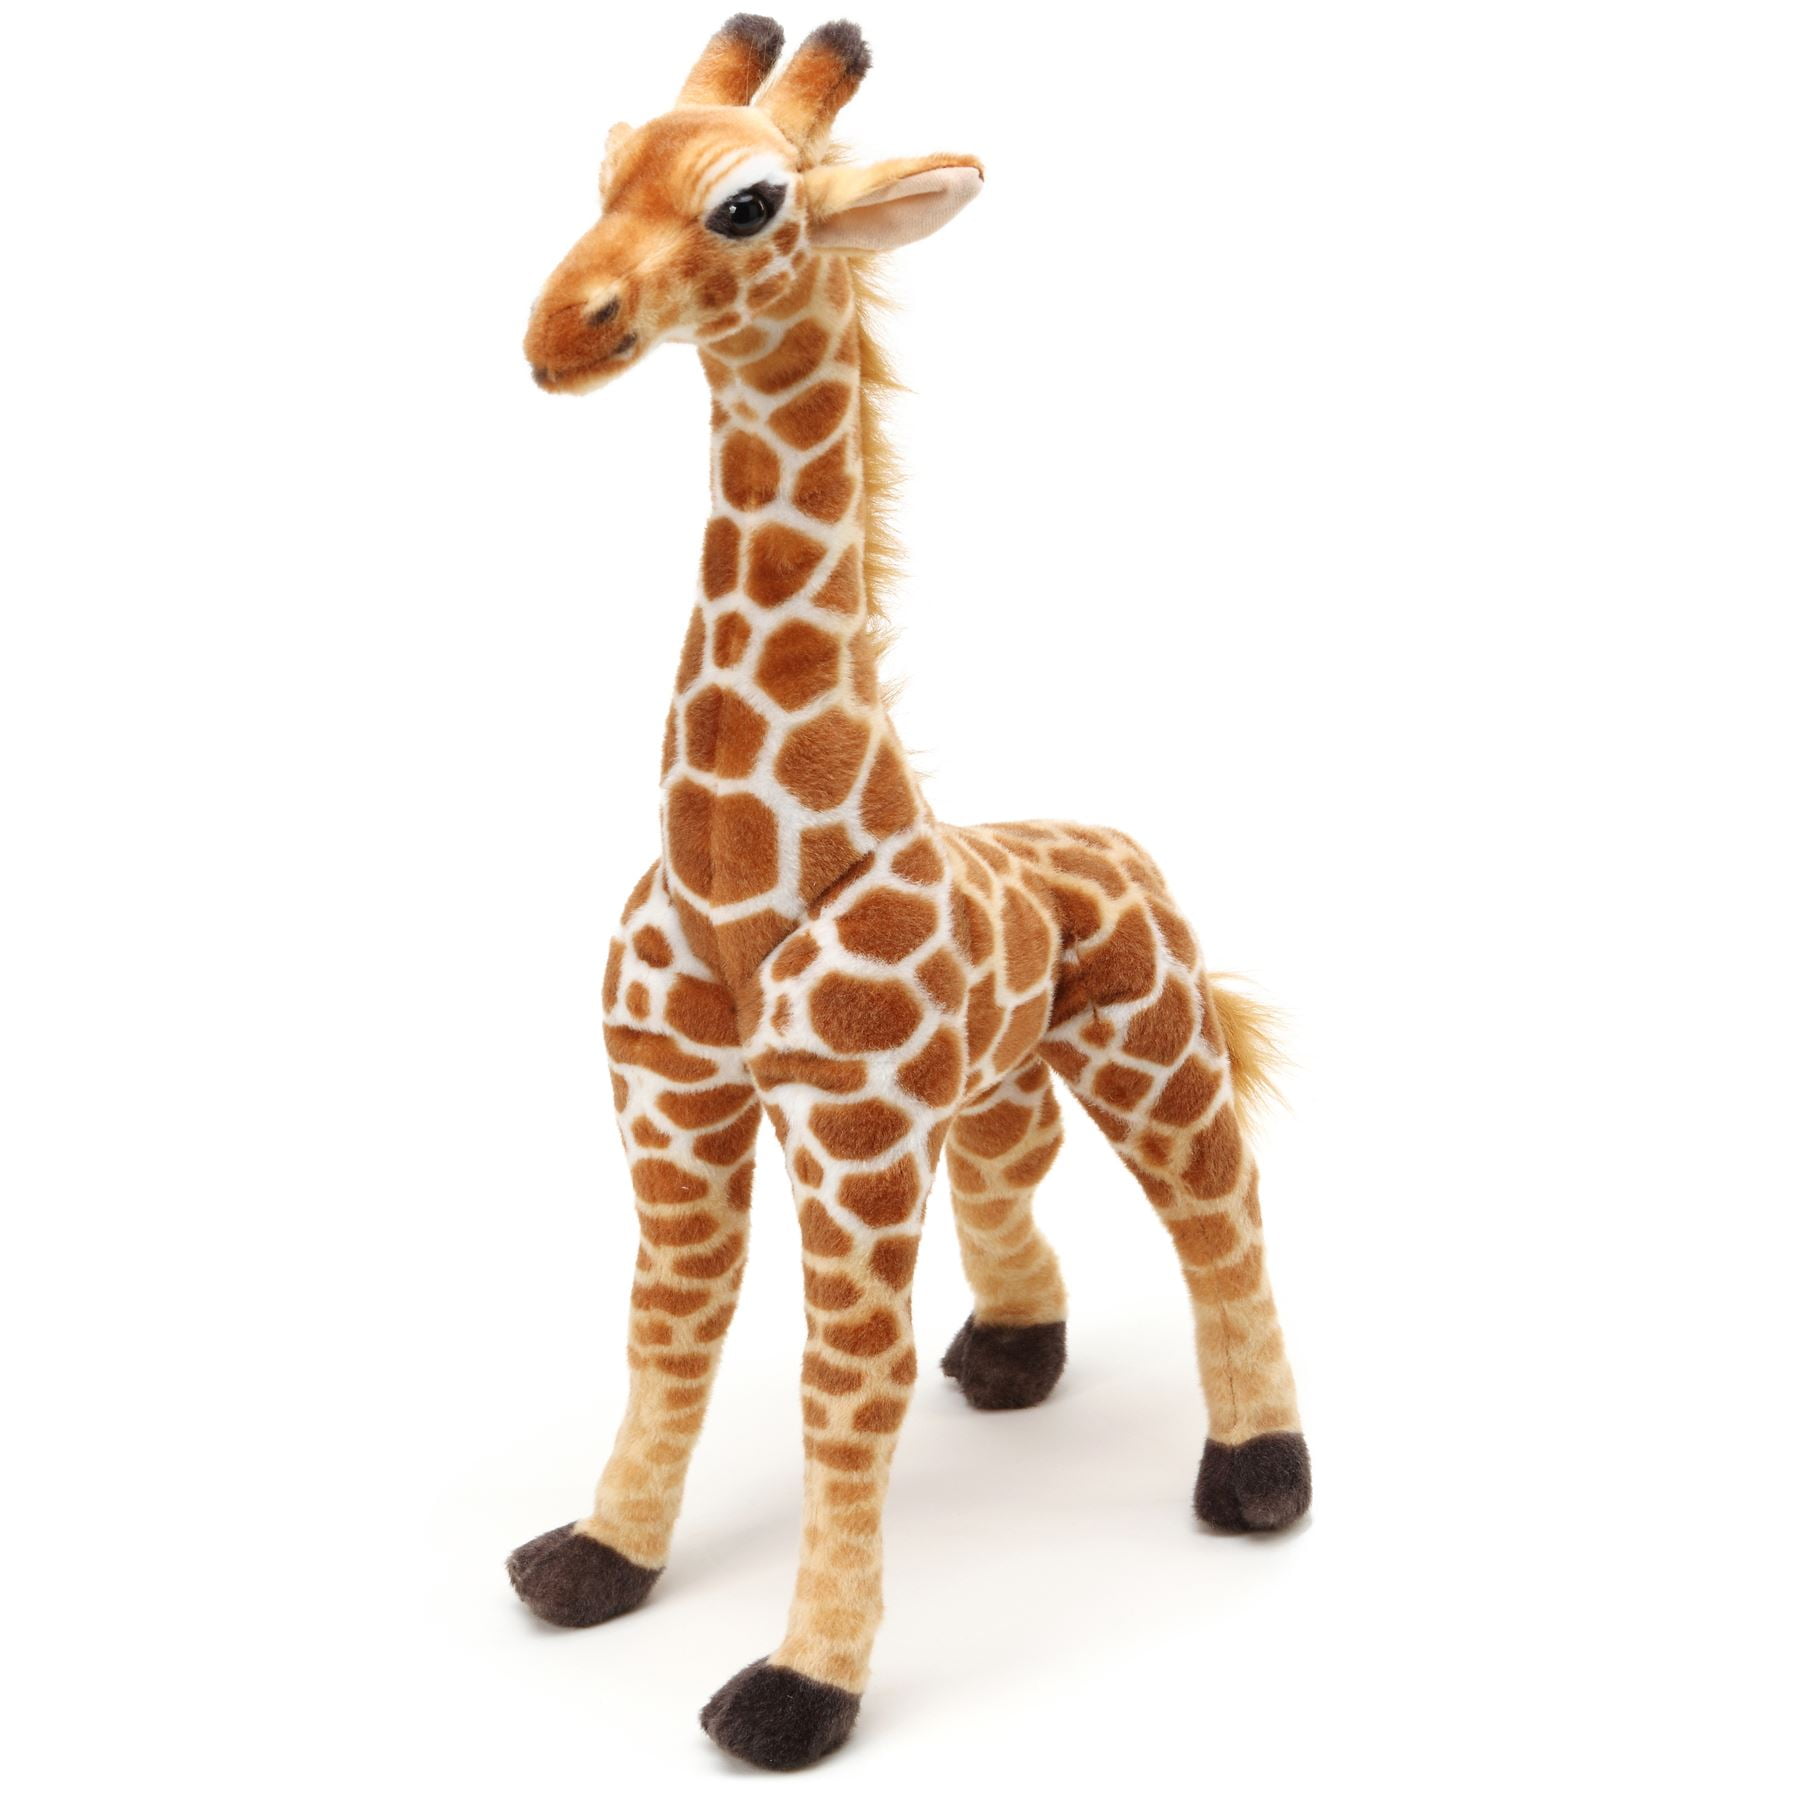 GINGER GIRAFFE Douglas stuffed soft 8" tall animal PLUSH cuddle toy 